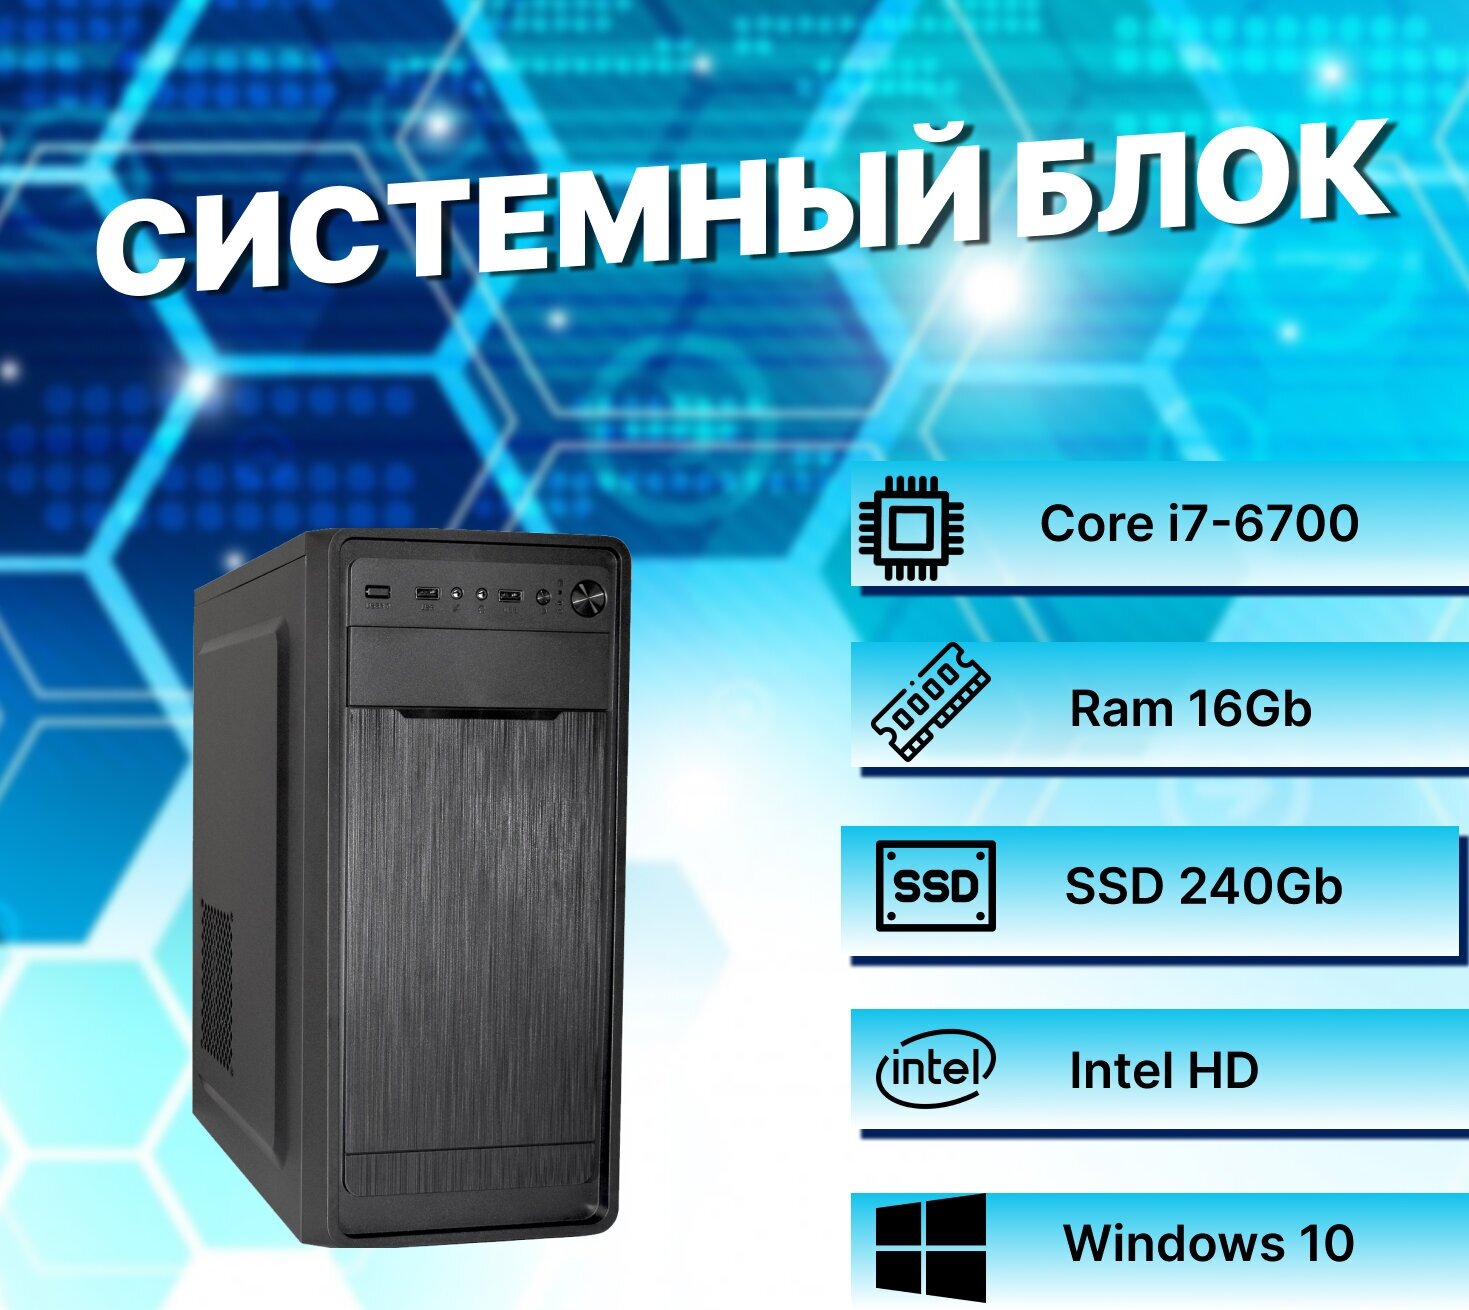 Системный блок Intel Core I7-6700 (3.4ГГц)/ RAM 16Gb/ SSD 240Gb/ Intel HD/ Windows 10 Pro